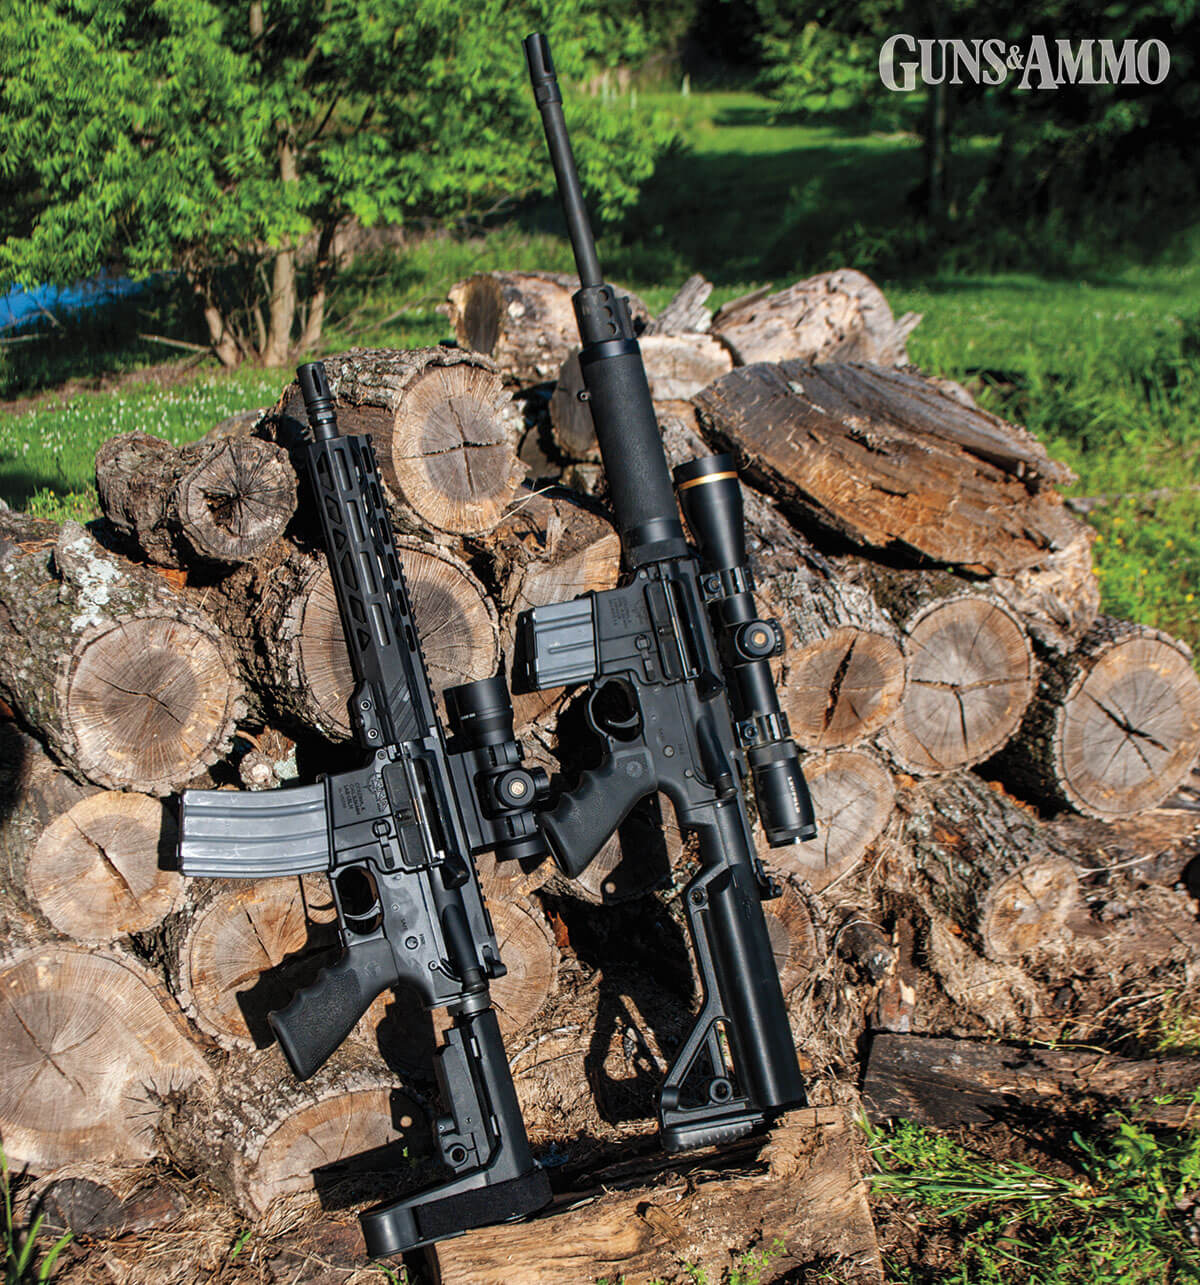 Rock River Lar 15lh Pistol Full Review Guns And Ammo 3759